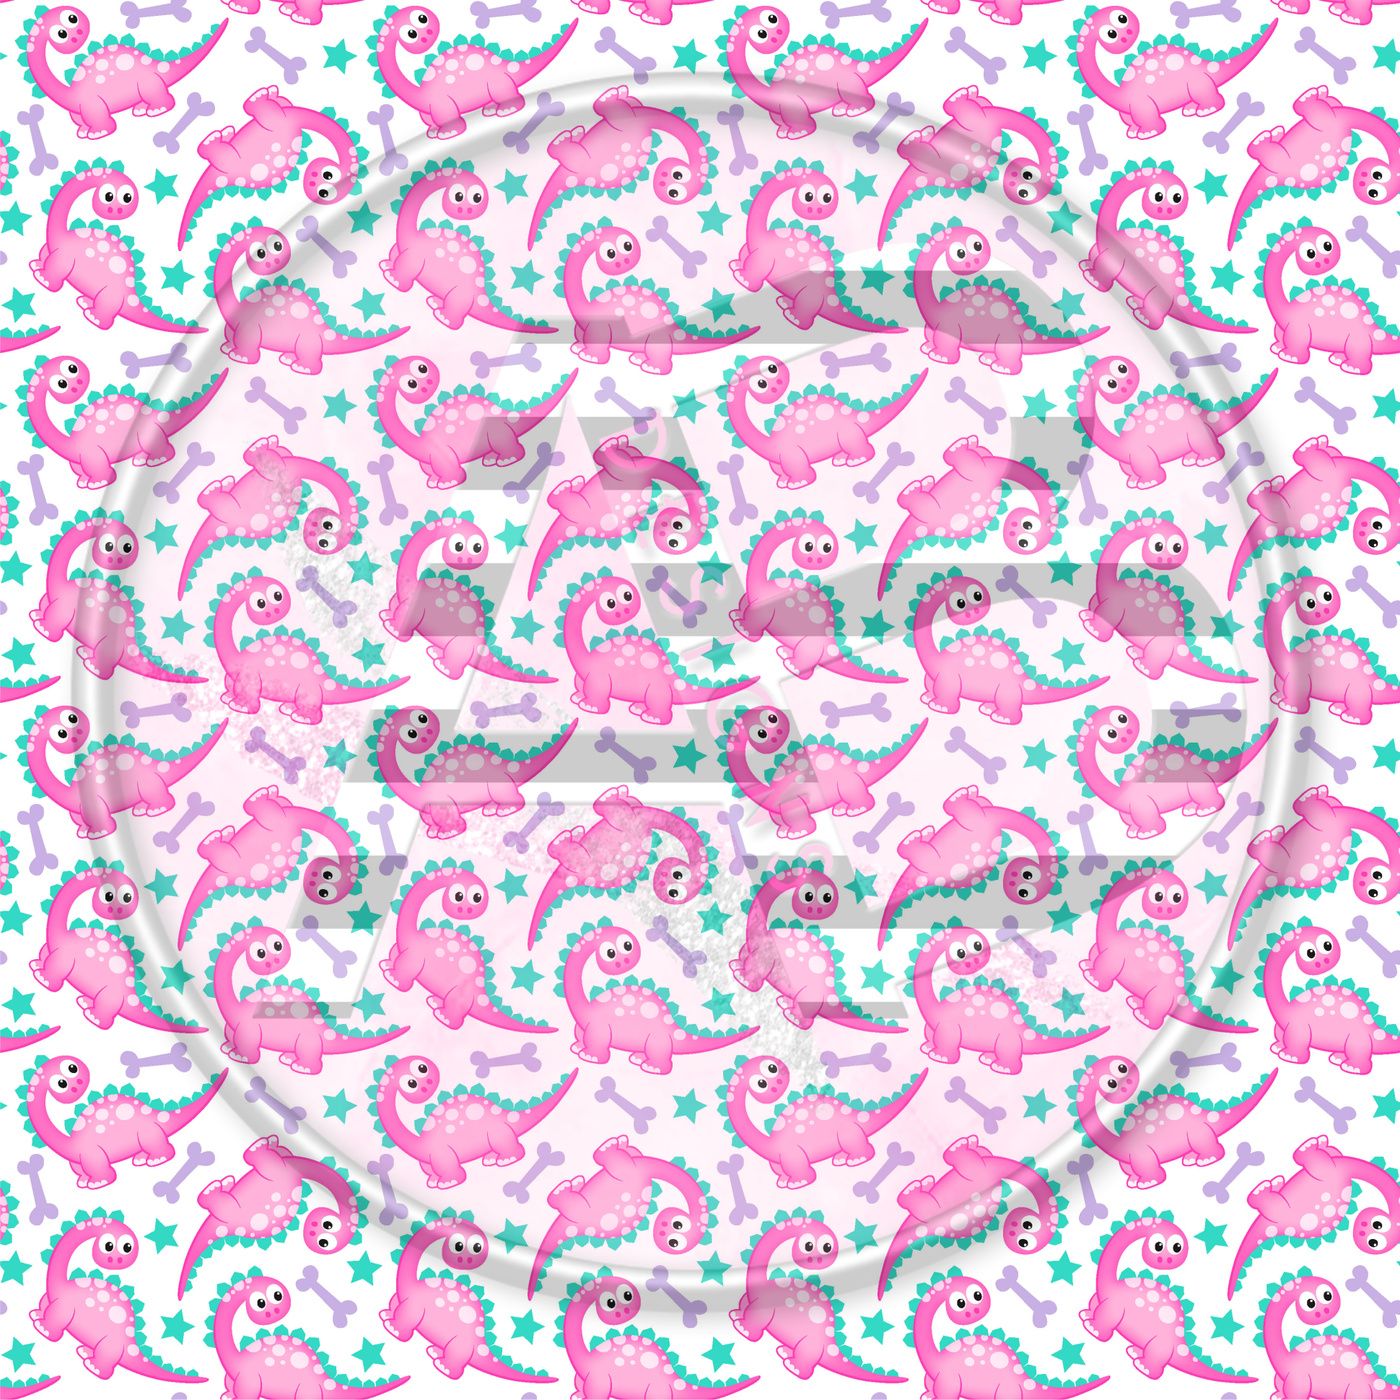 Adhesive Patterned Vinyl - Pink Dinosaur 3